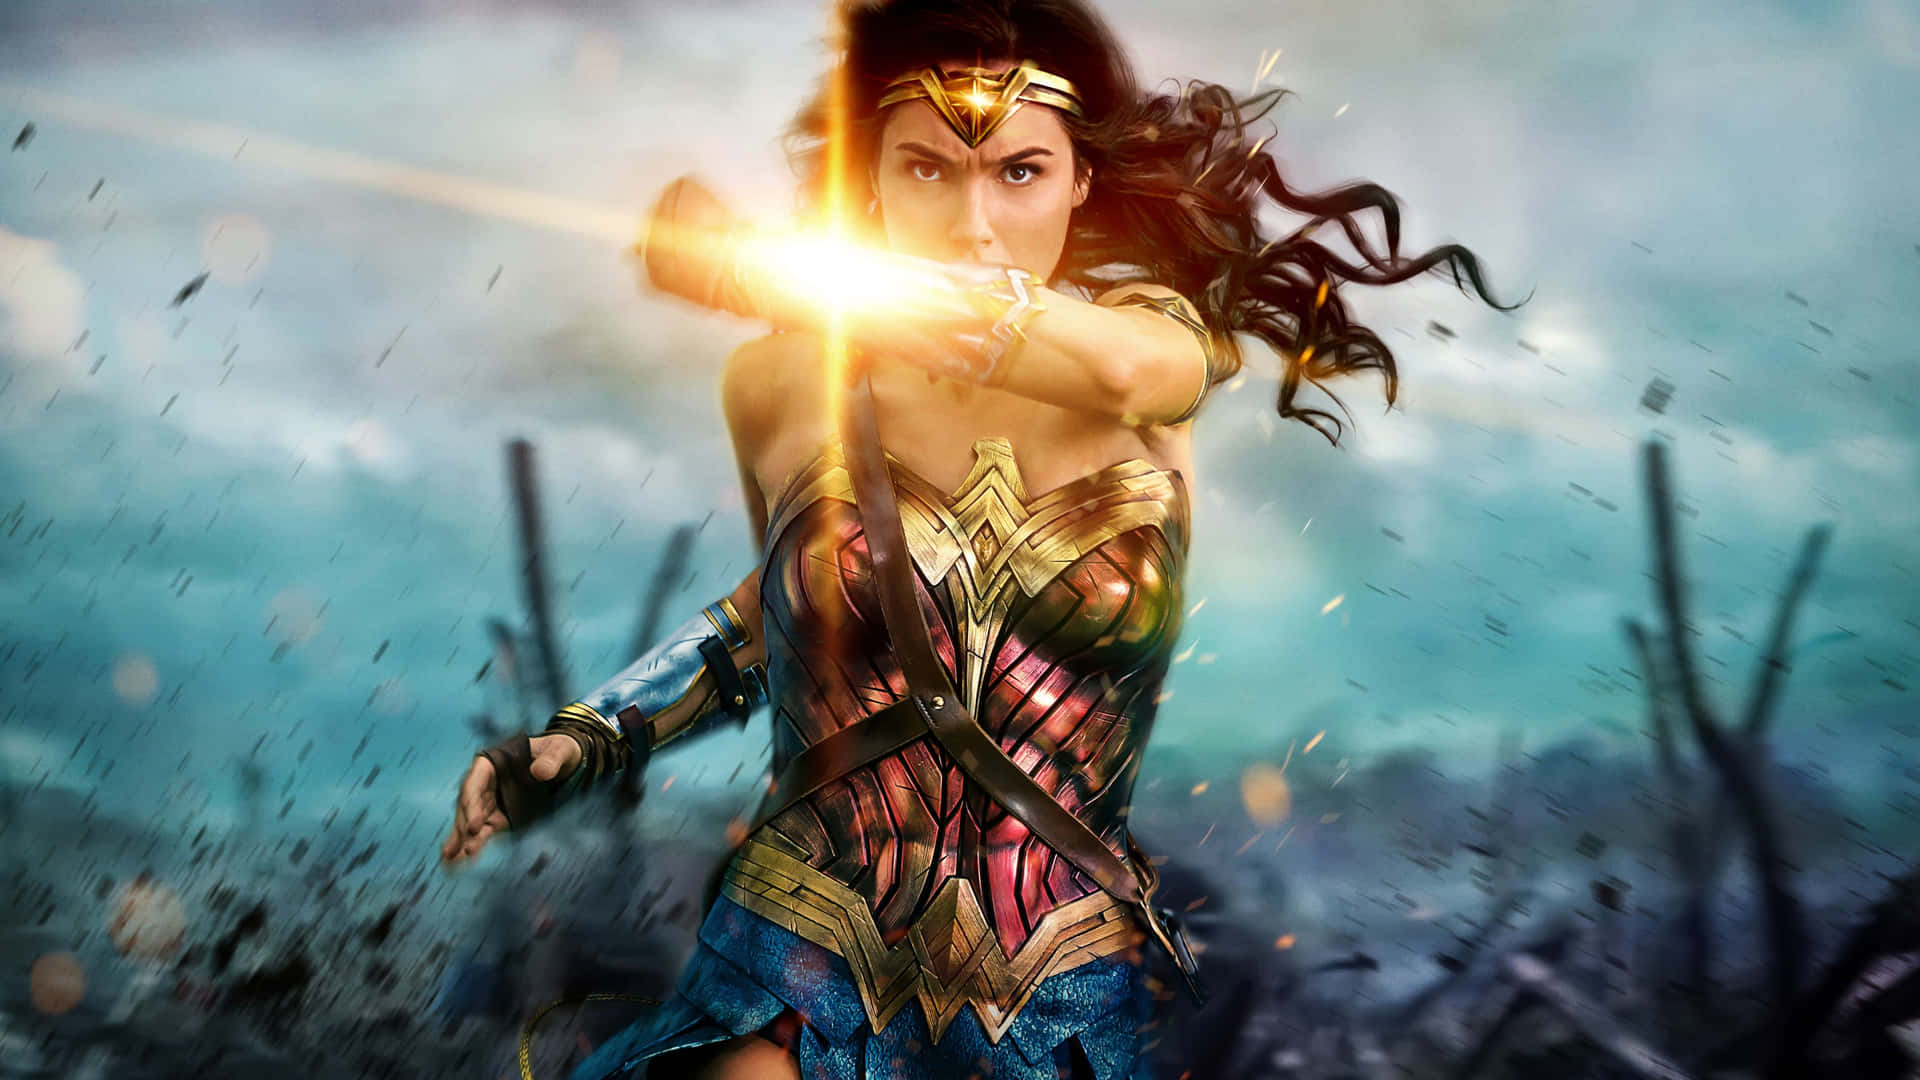 Action Wonder Woman Dc Comics